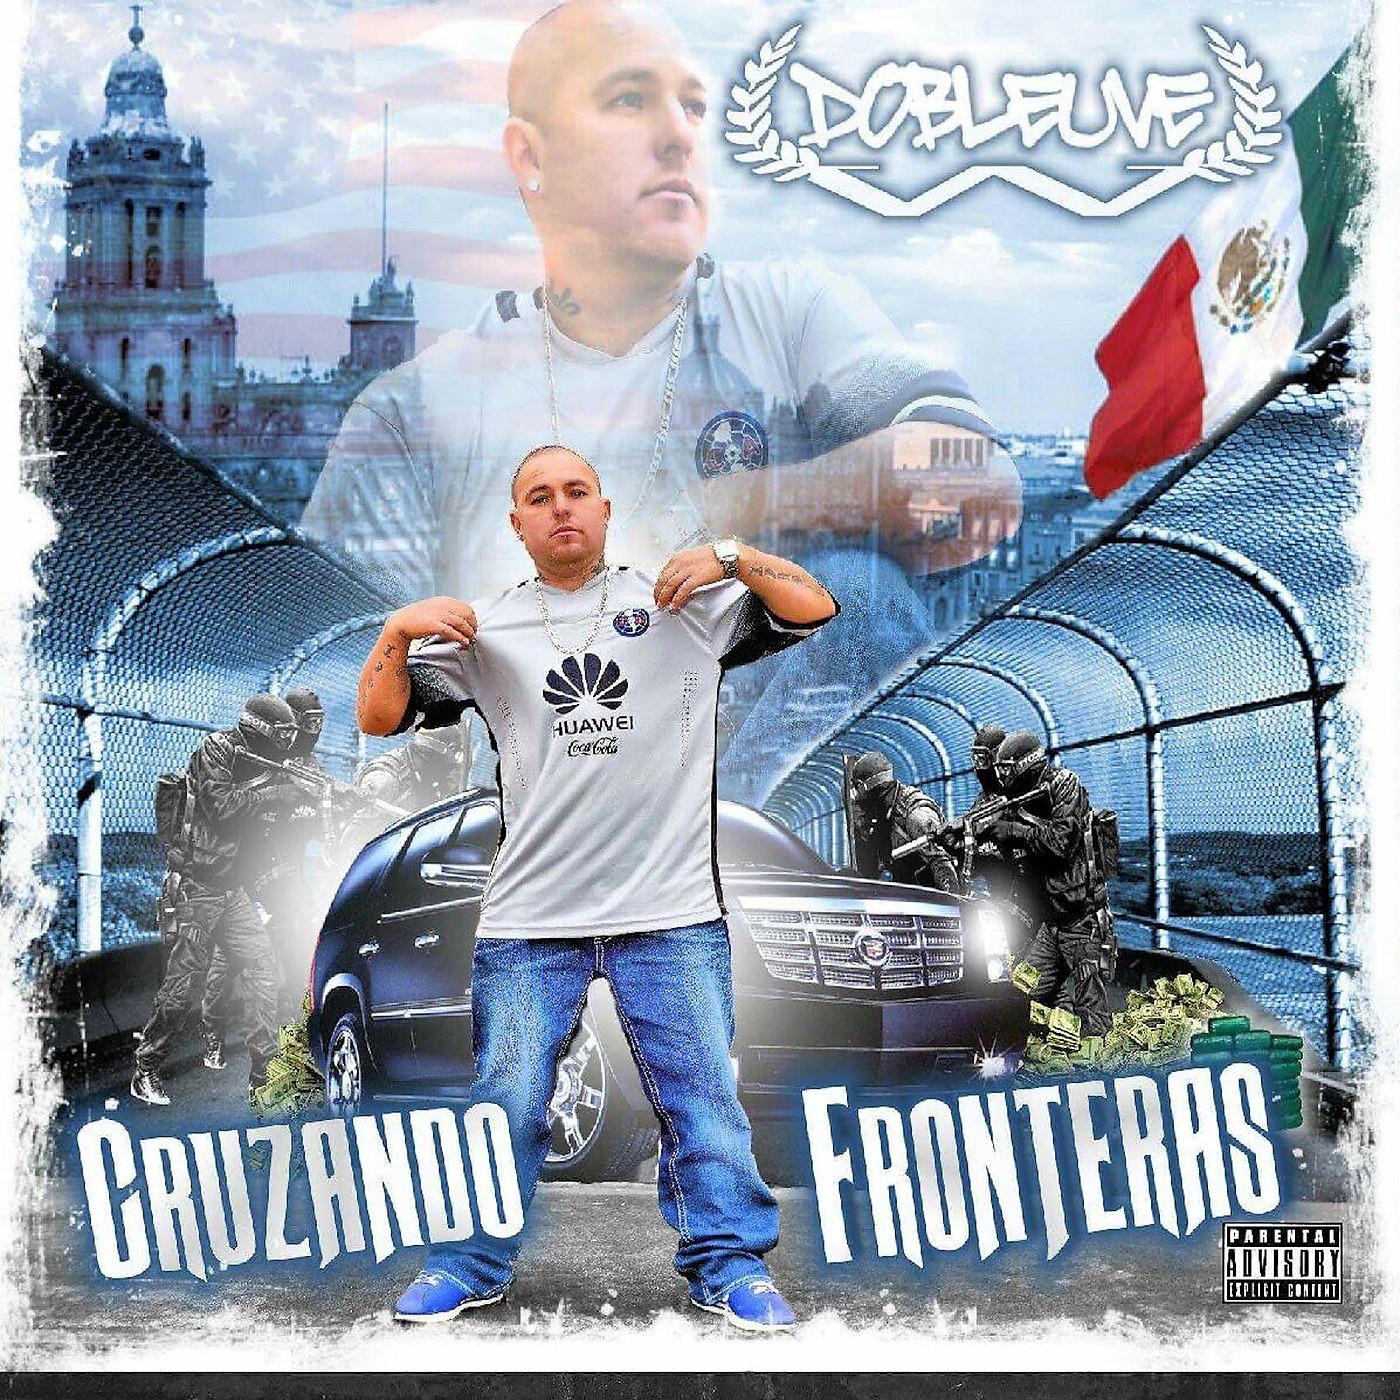 Постер альбома Cruzando Fronteras